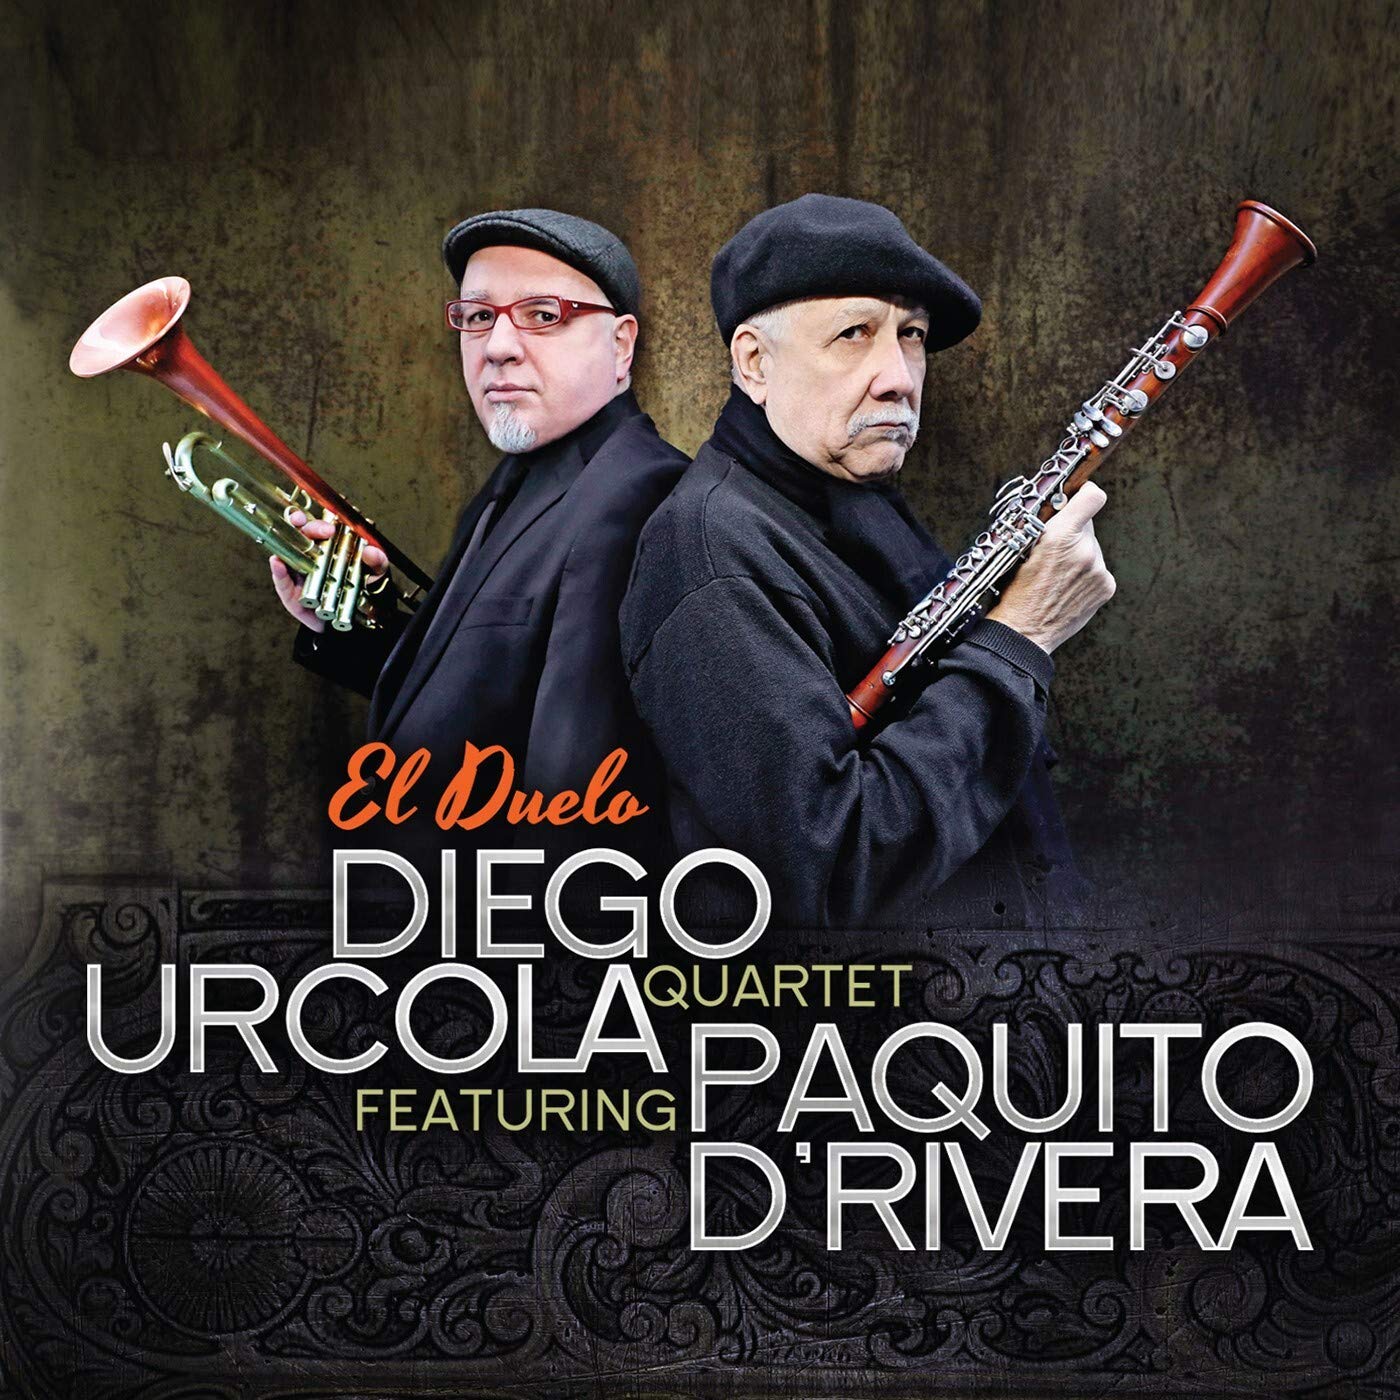 Diego Urcola Quartet Presents El Duelo